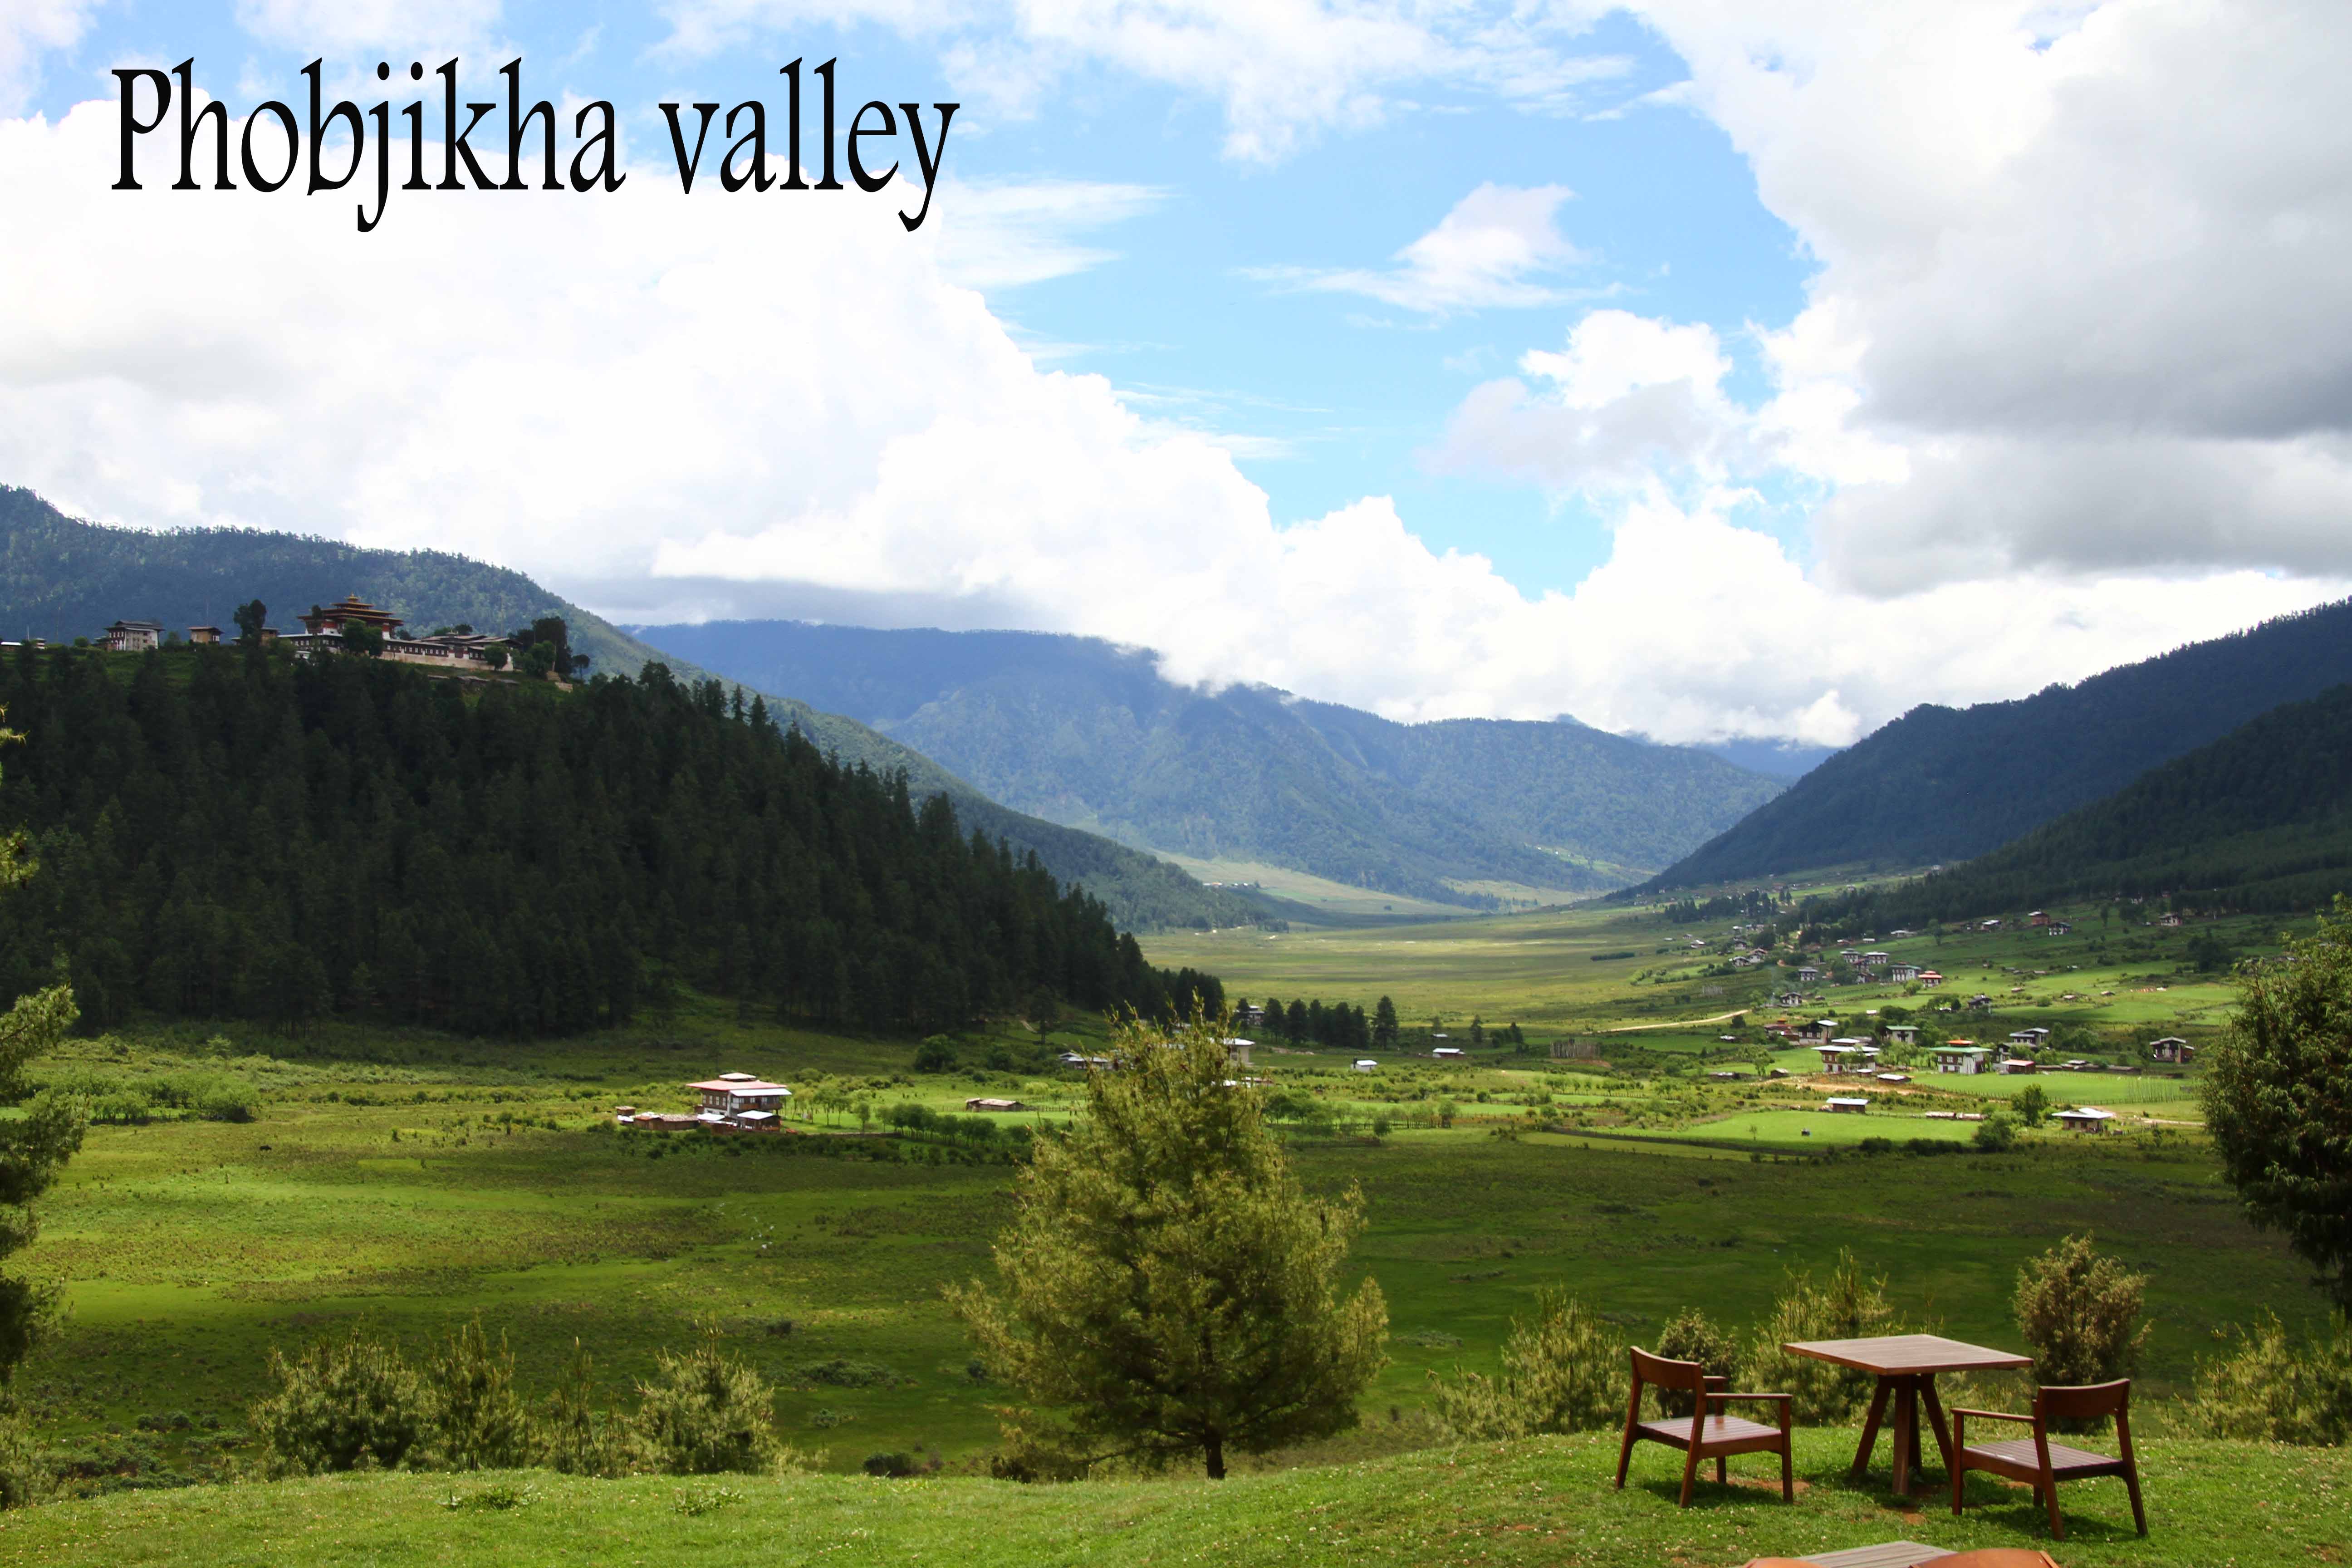 Phobjikha valley